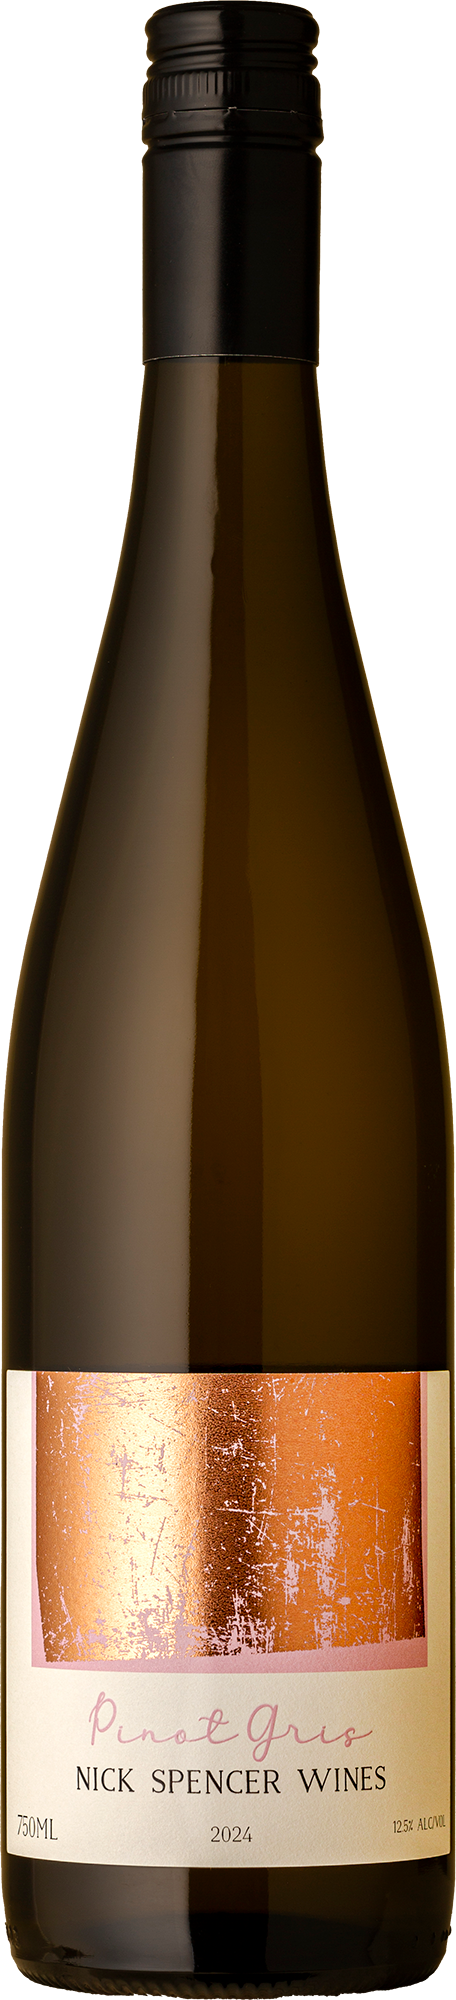 Nick Spencer - Pinot Gris 2024 White Wine